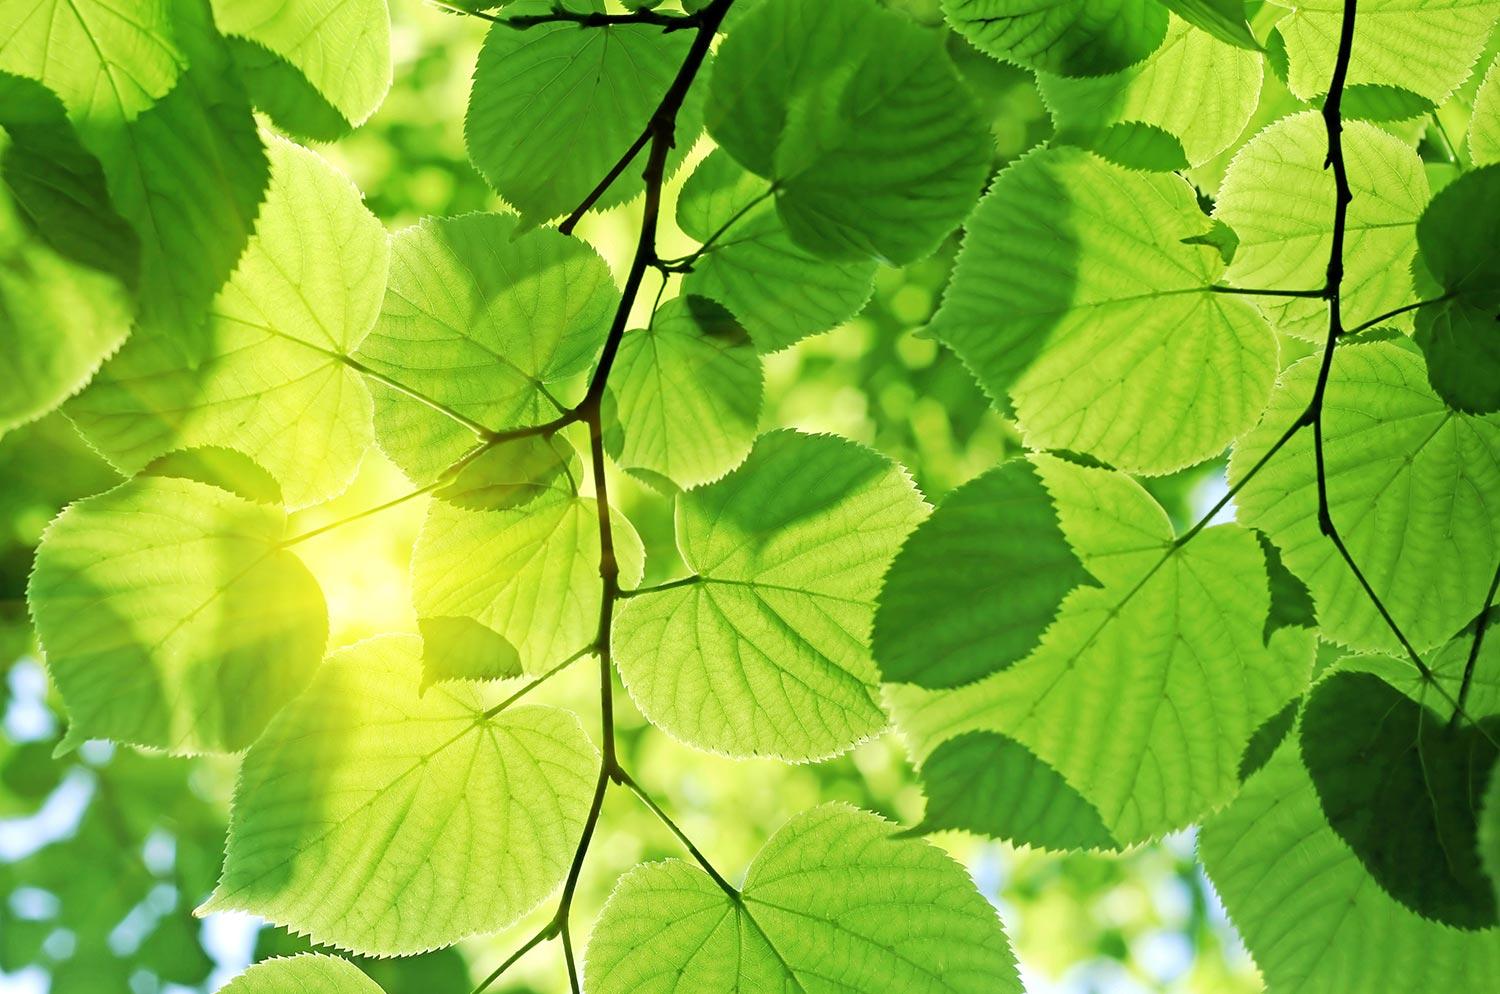 Green foliage illuminated by sunlight